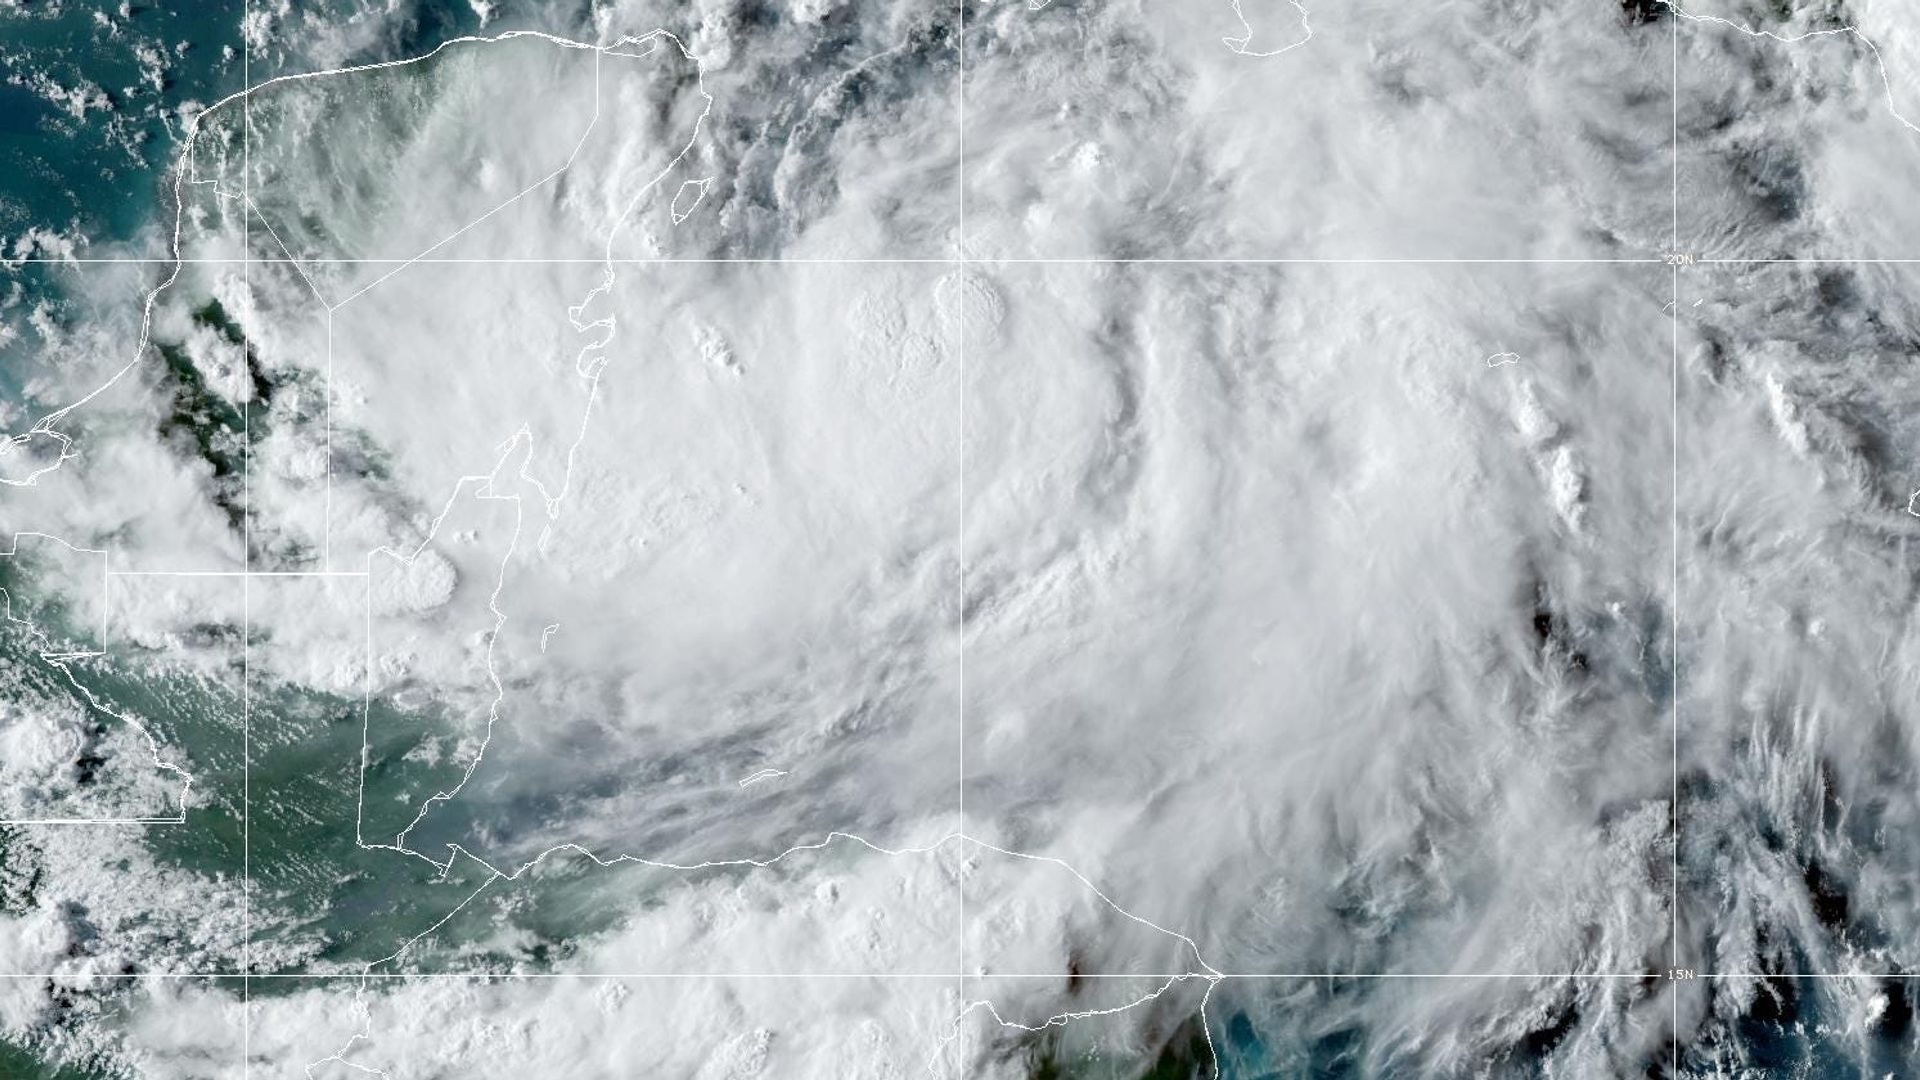 Florida residents have begun bracing for impact as Tropical Storm Idalia barrels its way toward the Gulf Coast.